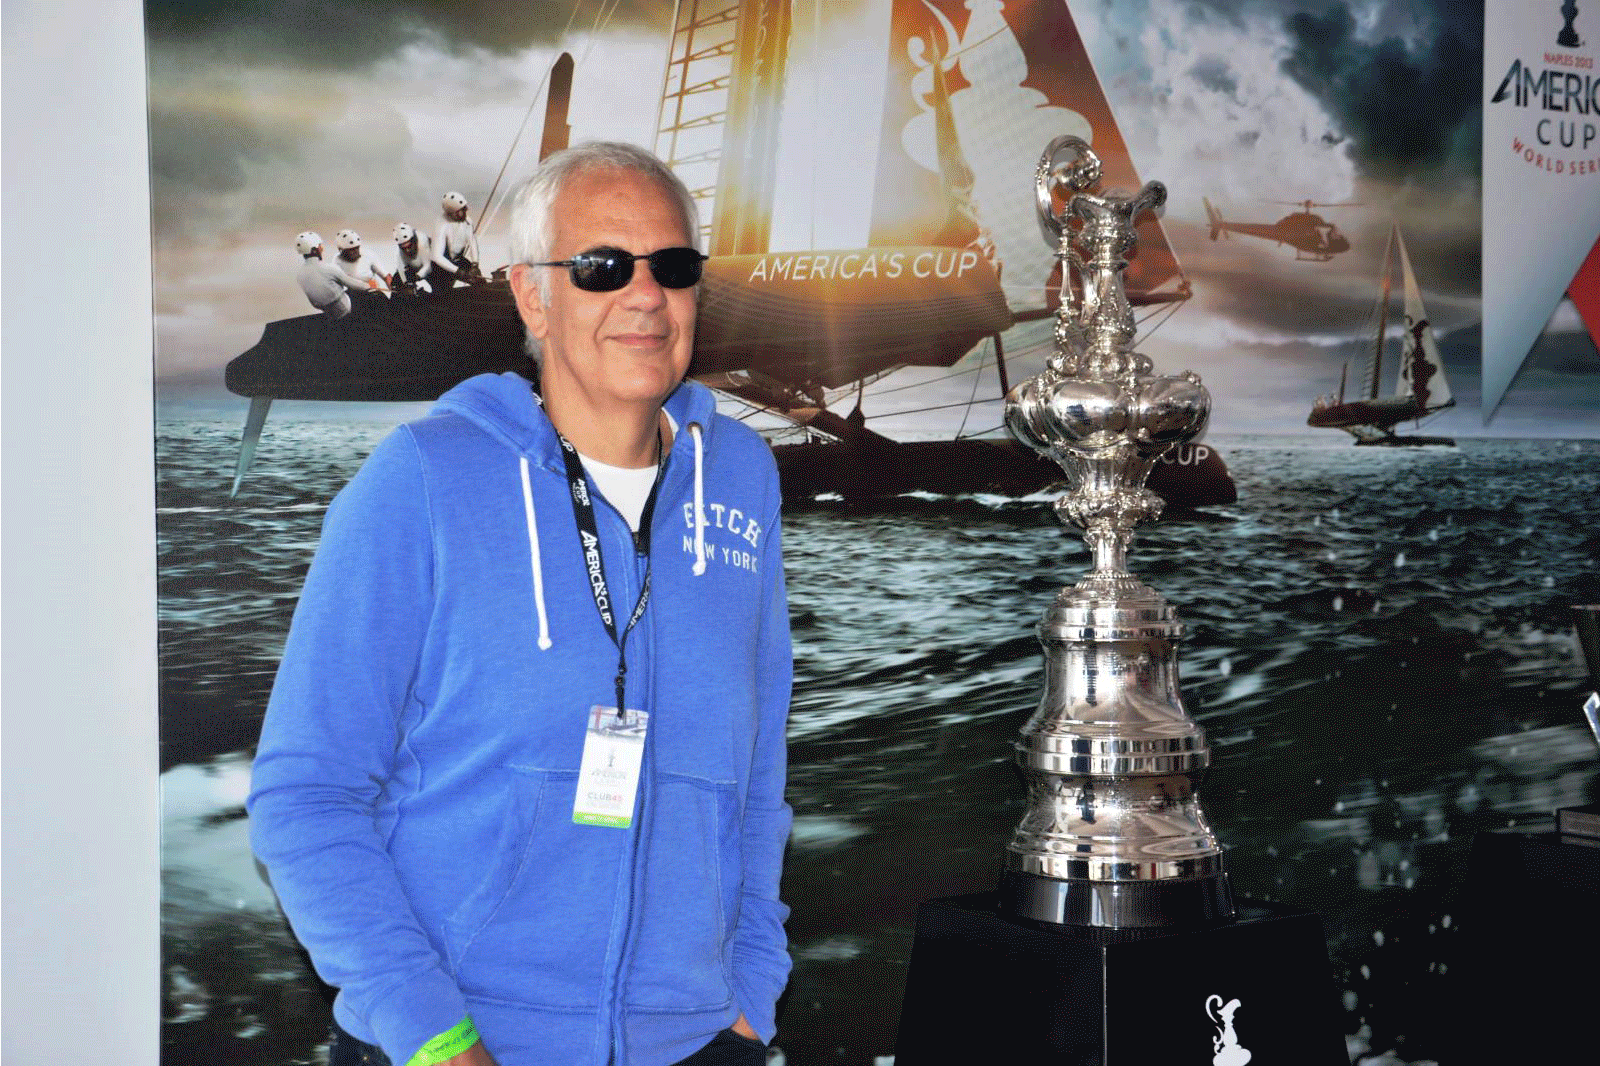 America's Cup World Series Napoli, April 2013